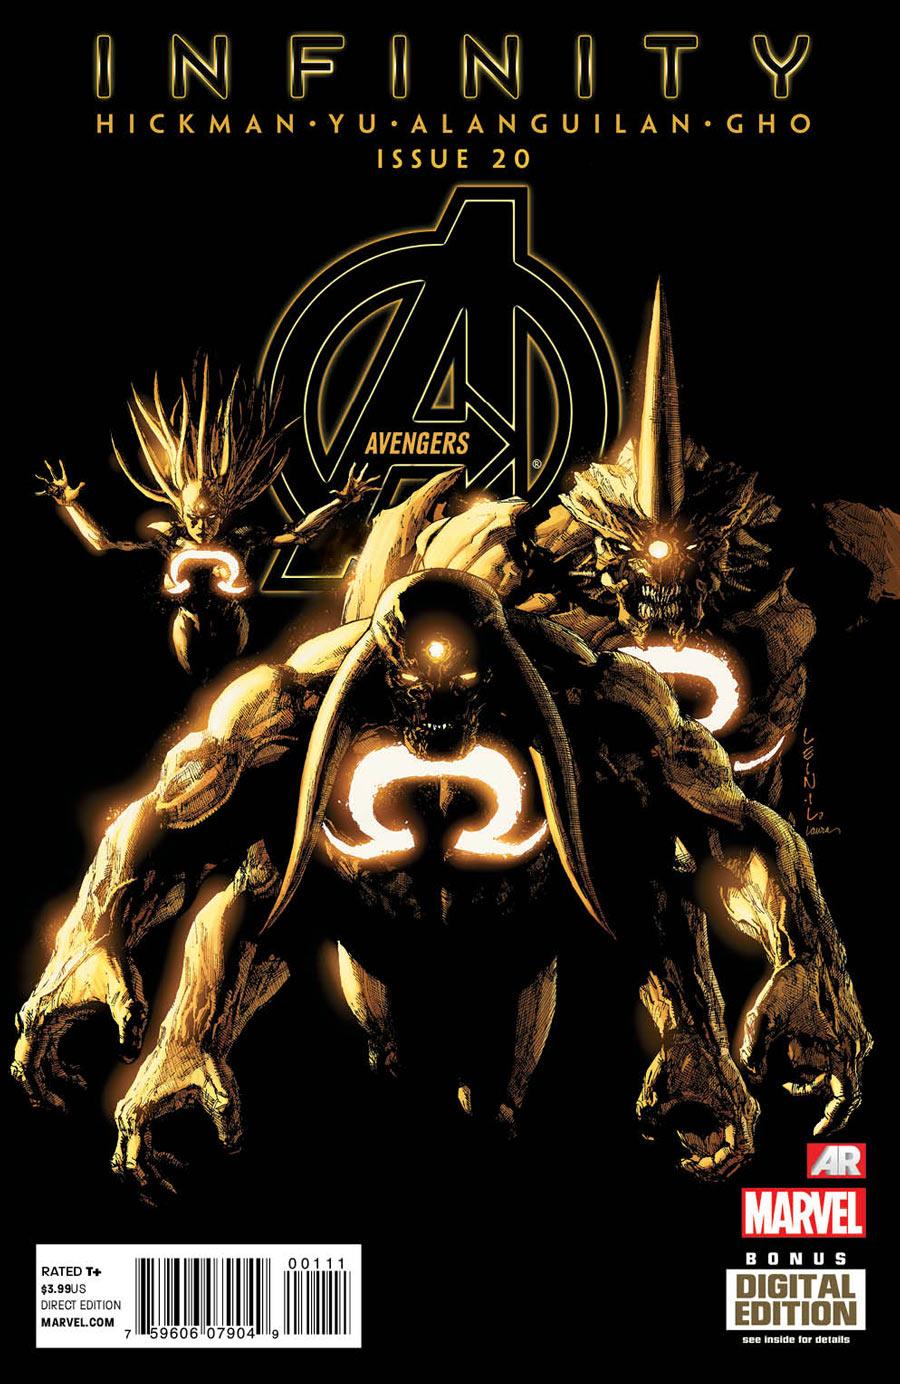 The Avengers Vol. 5 #20